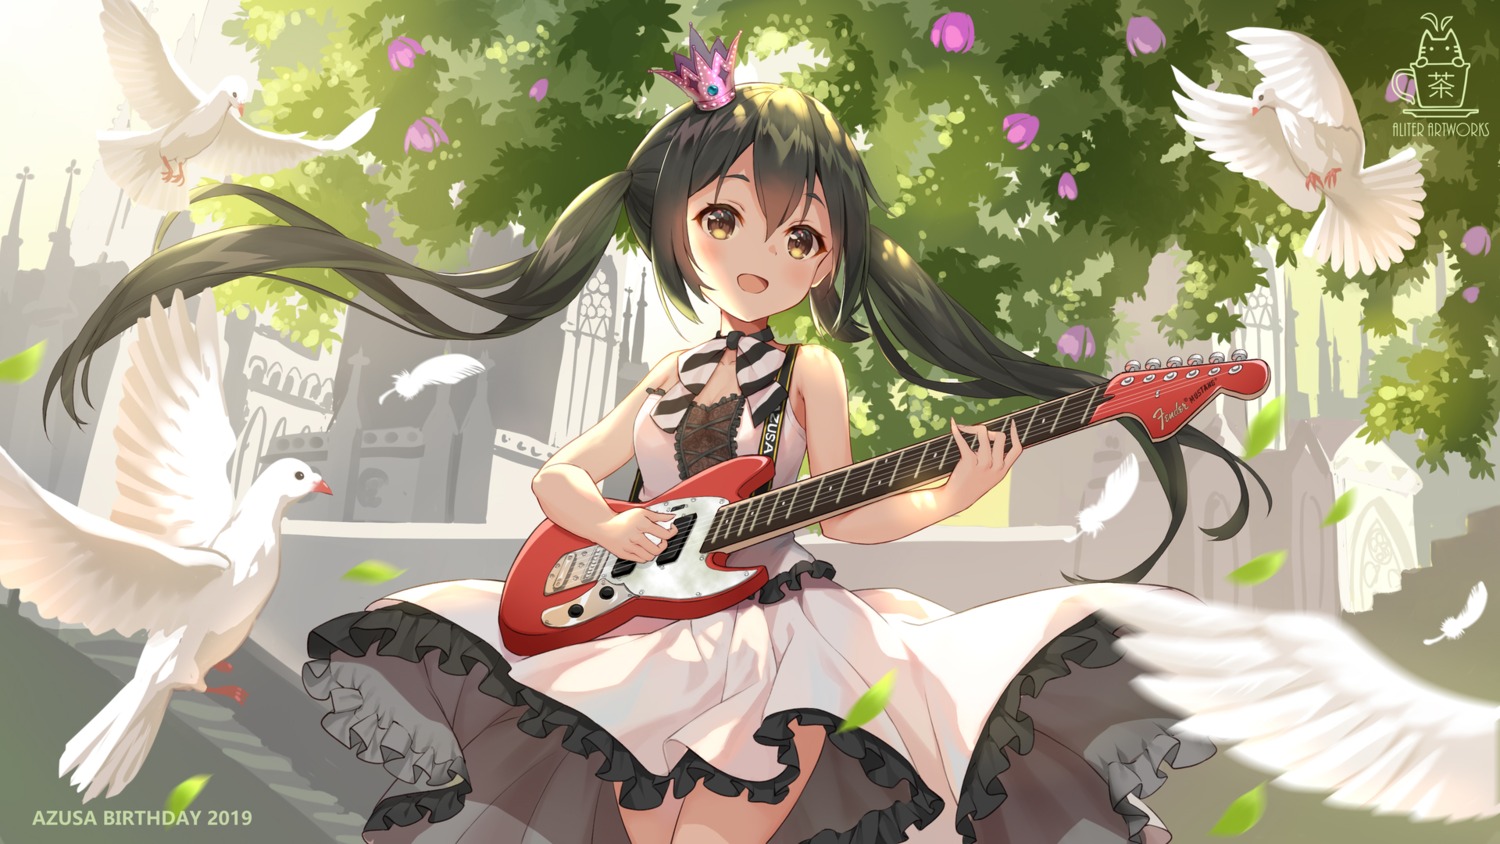 anime girl with guitar wallpaper